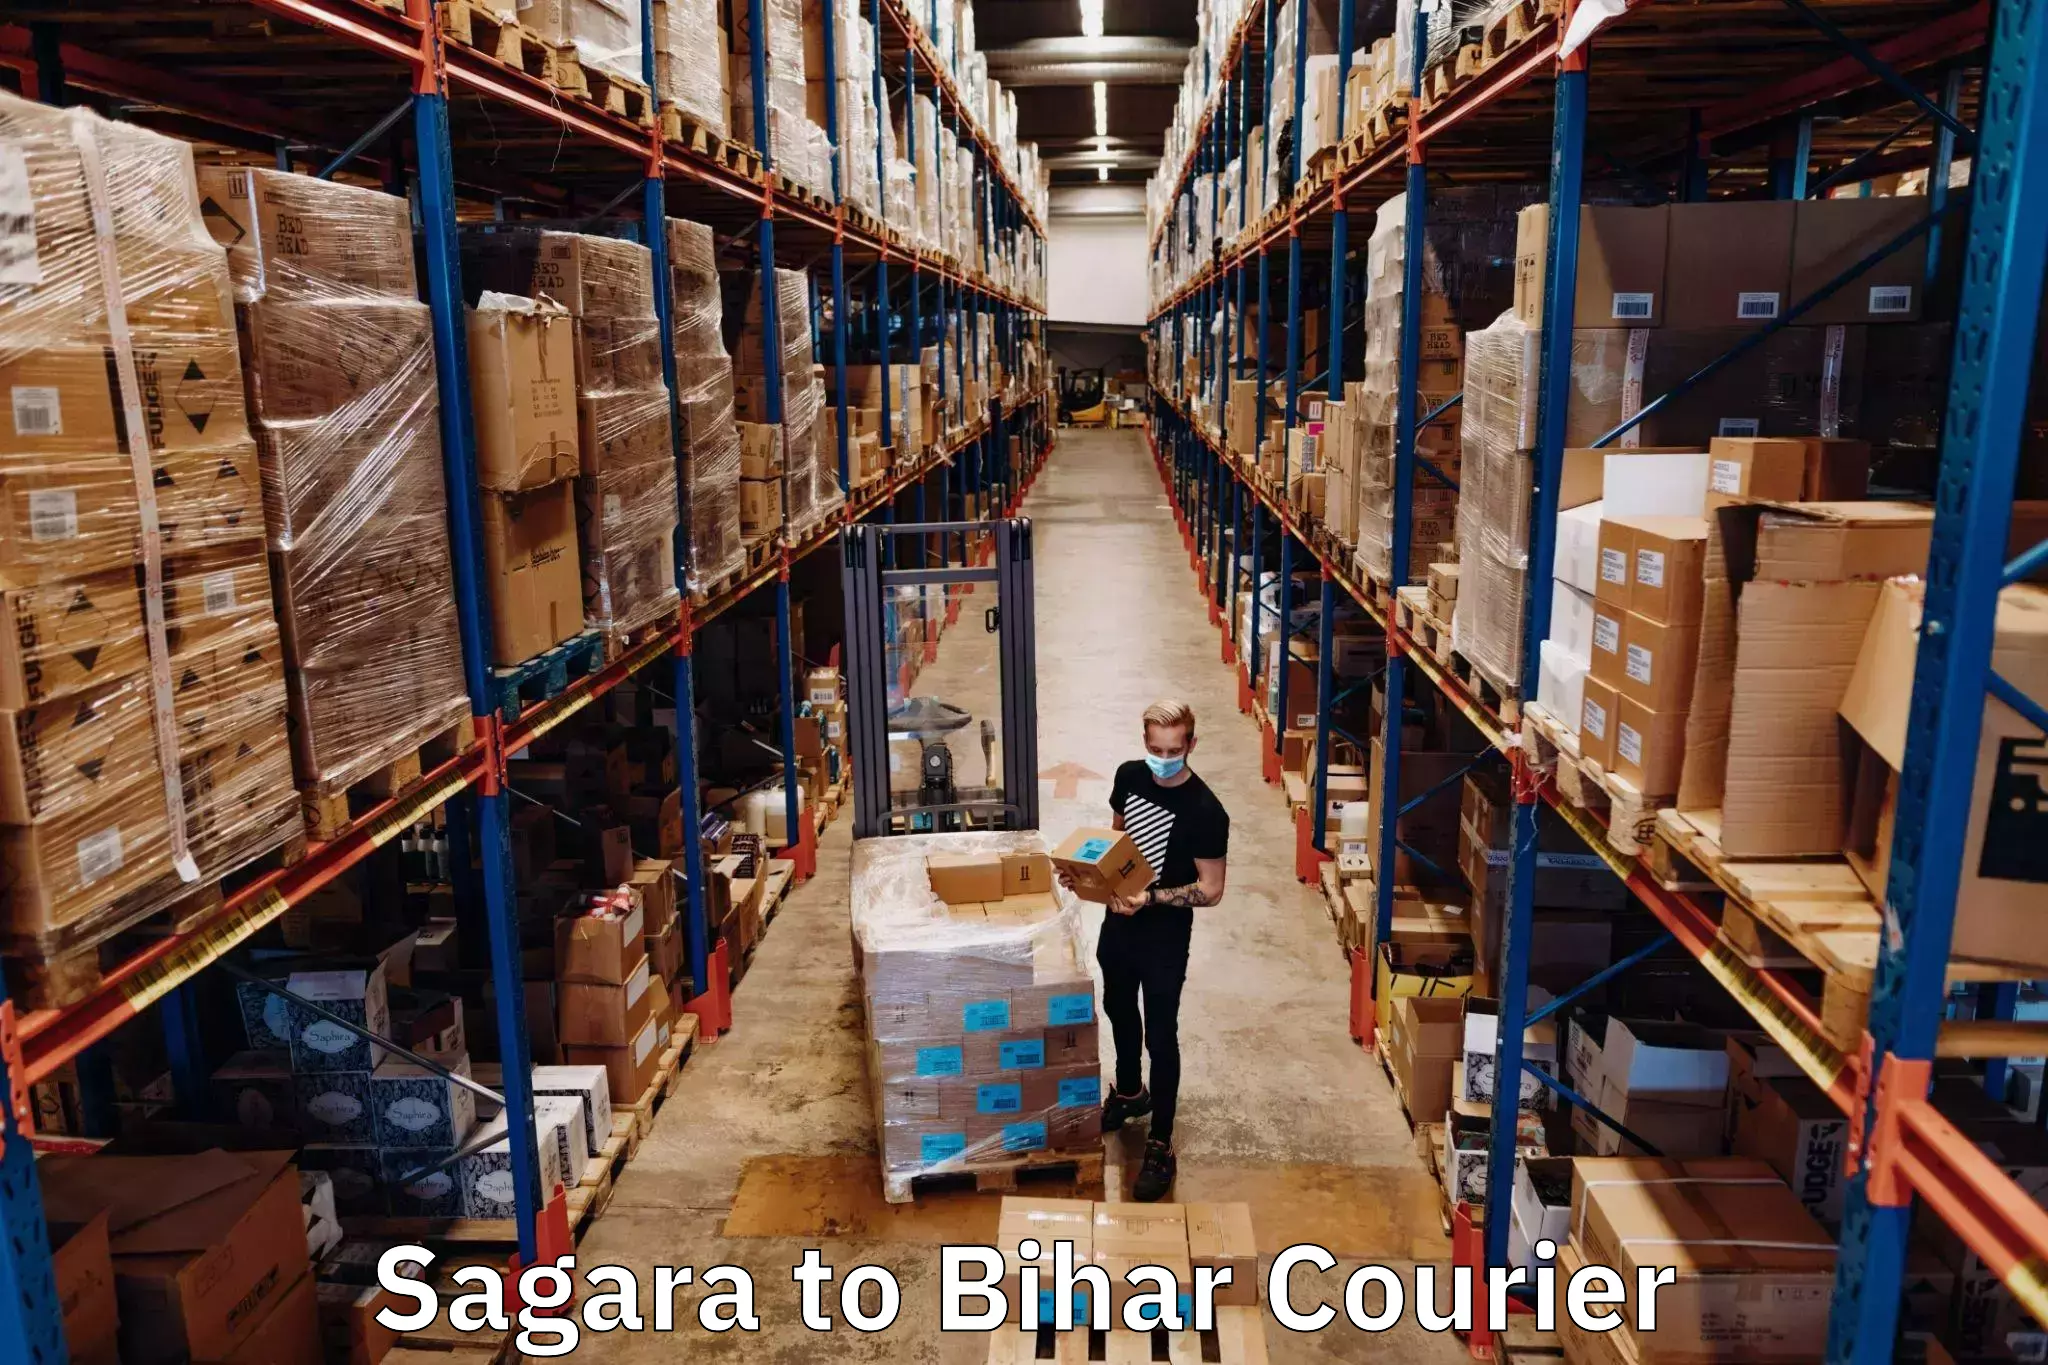 Courier service efficiency Sagara to Biraul